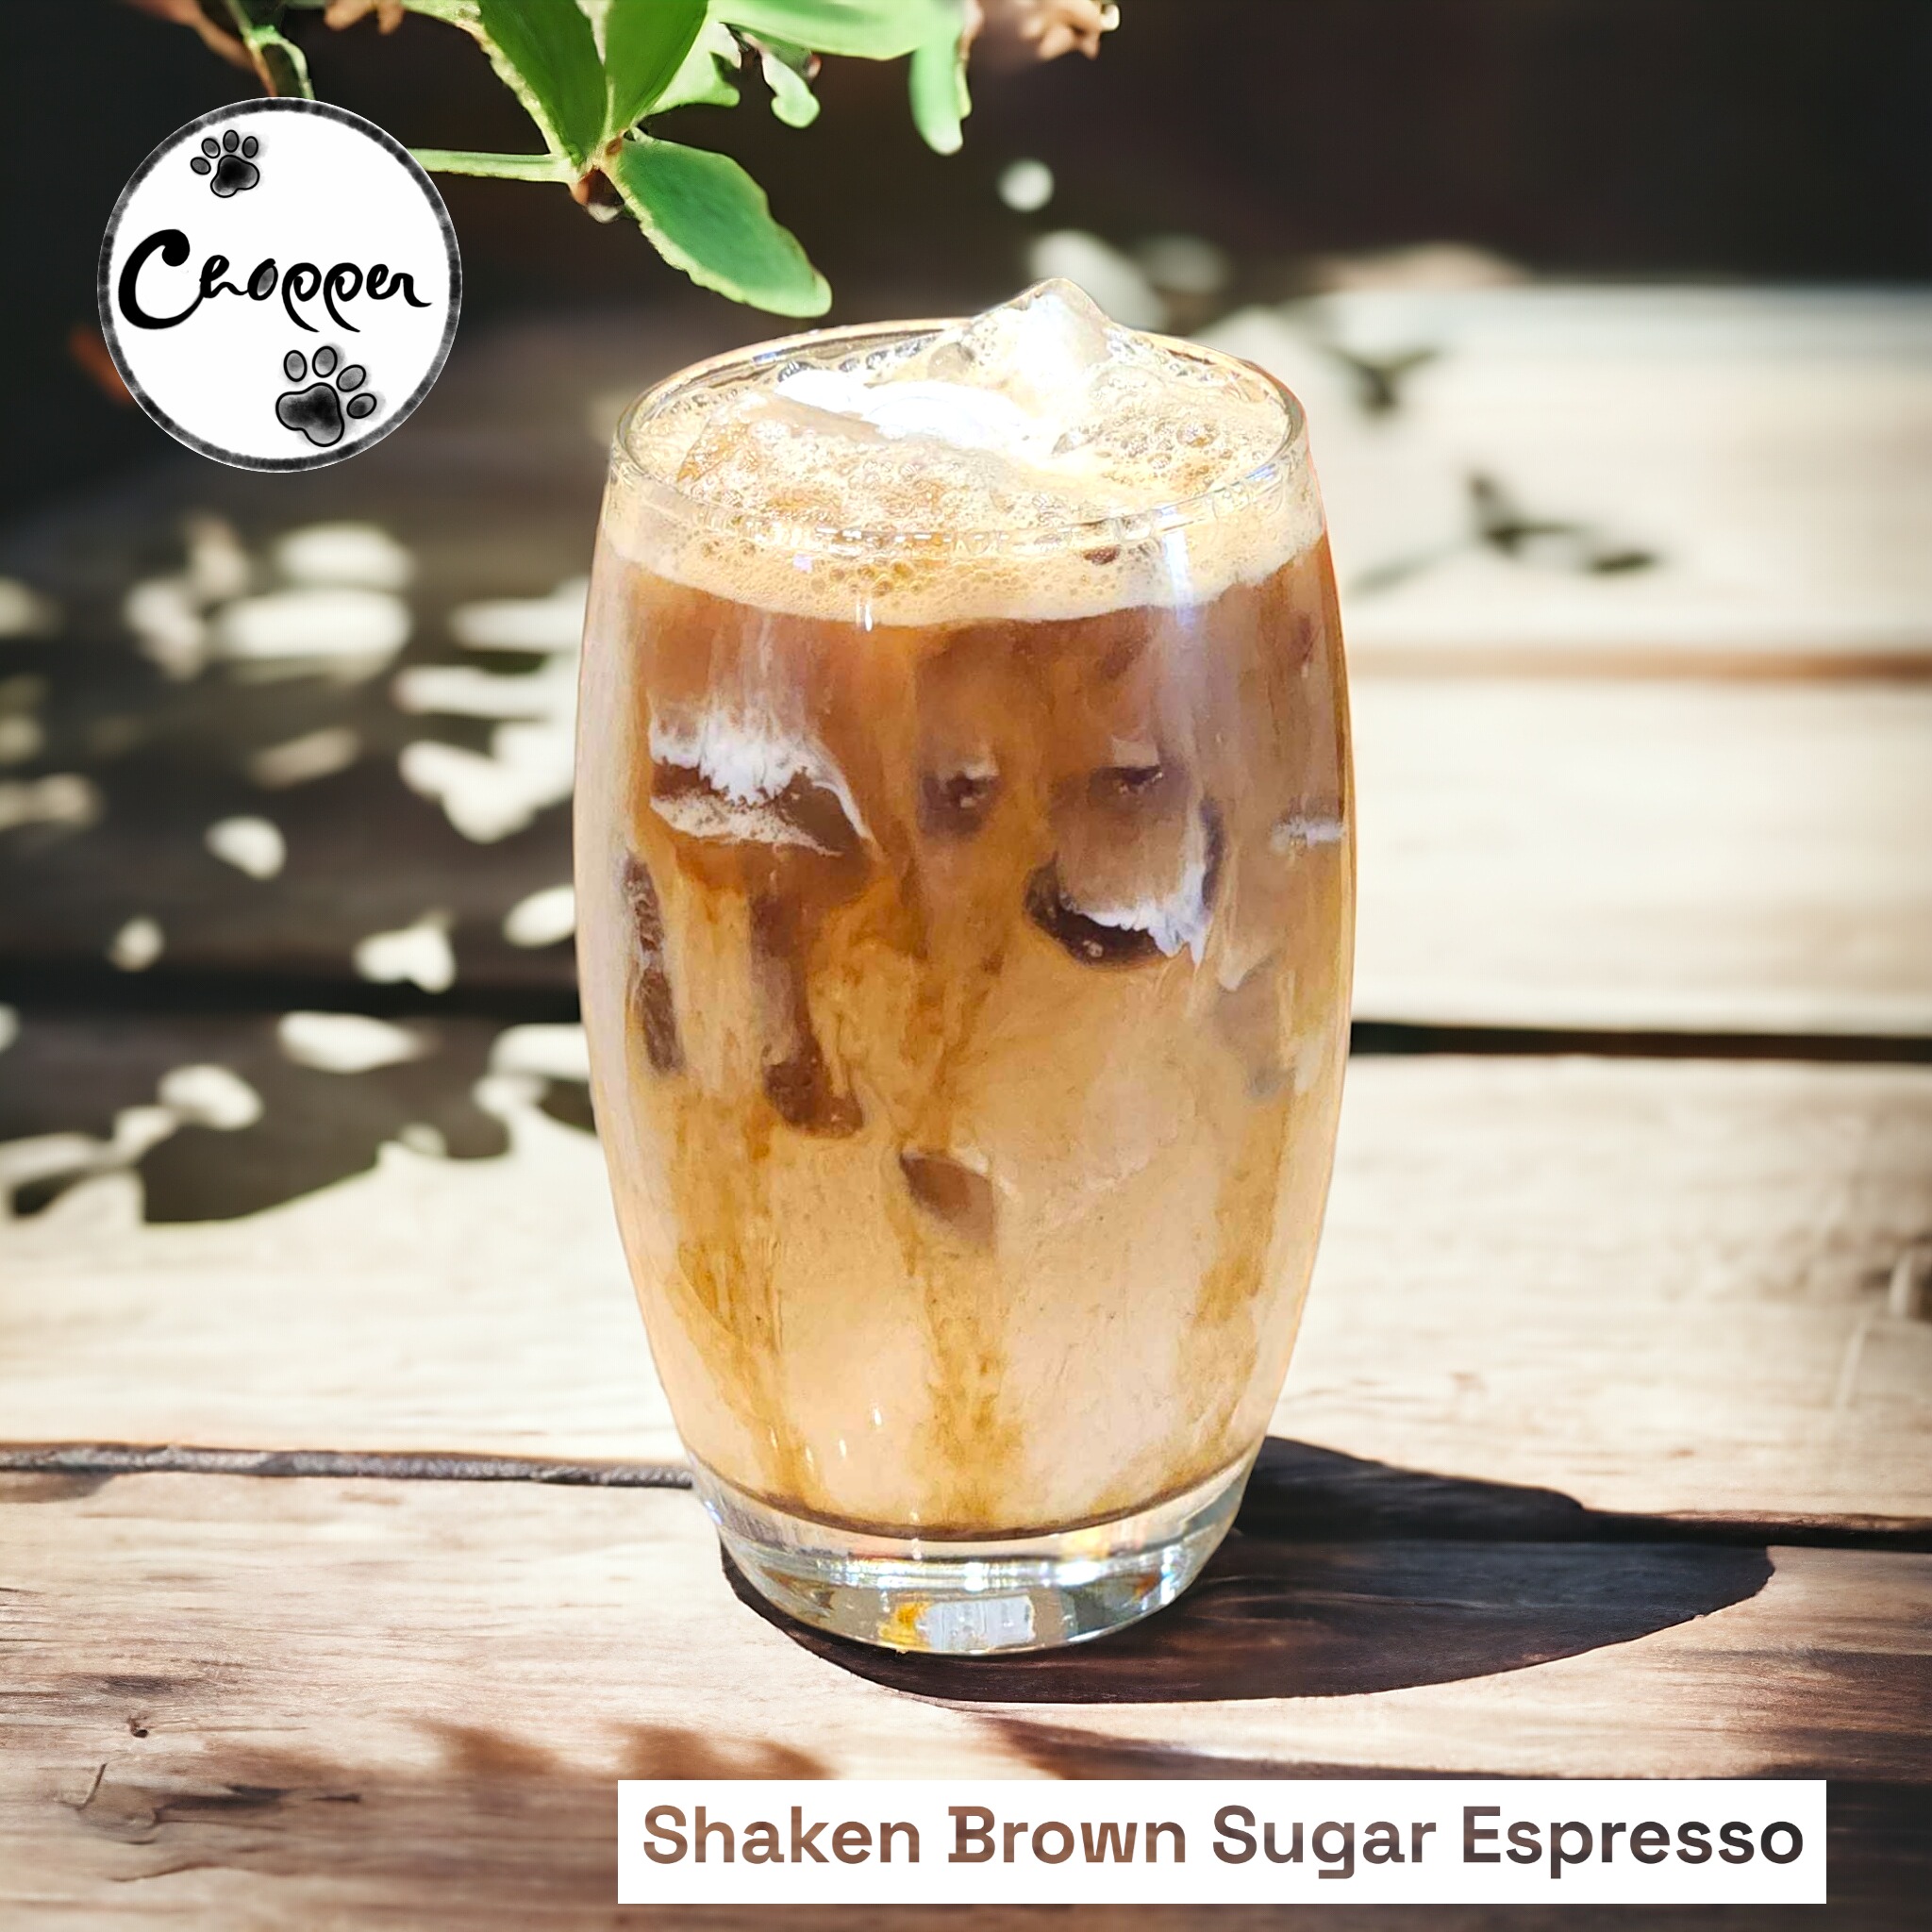 Shaken Brown Sugar Espresso